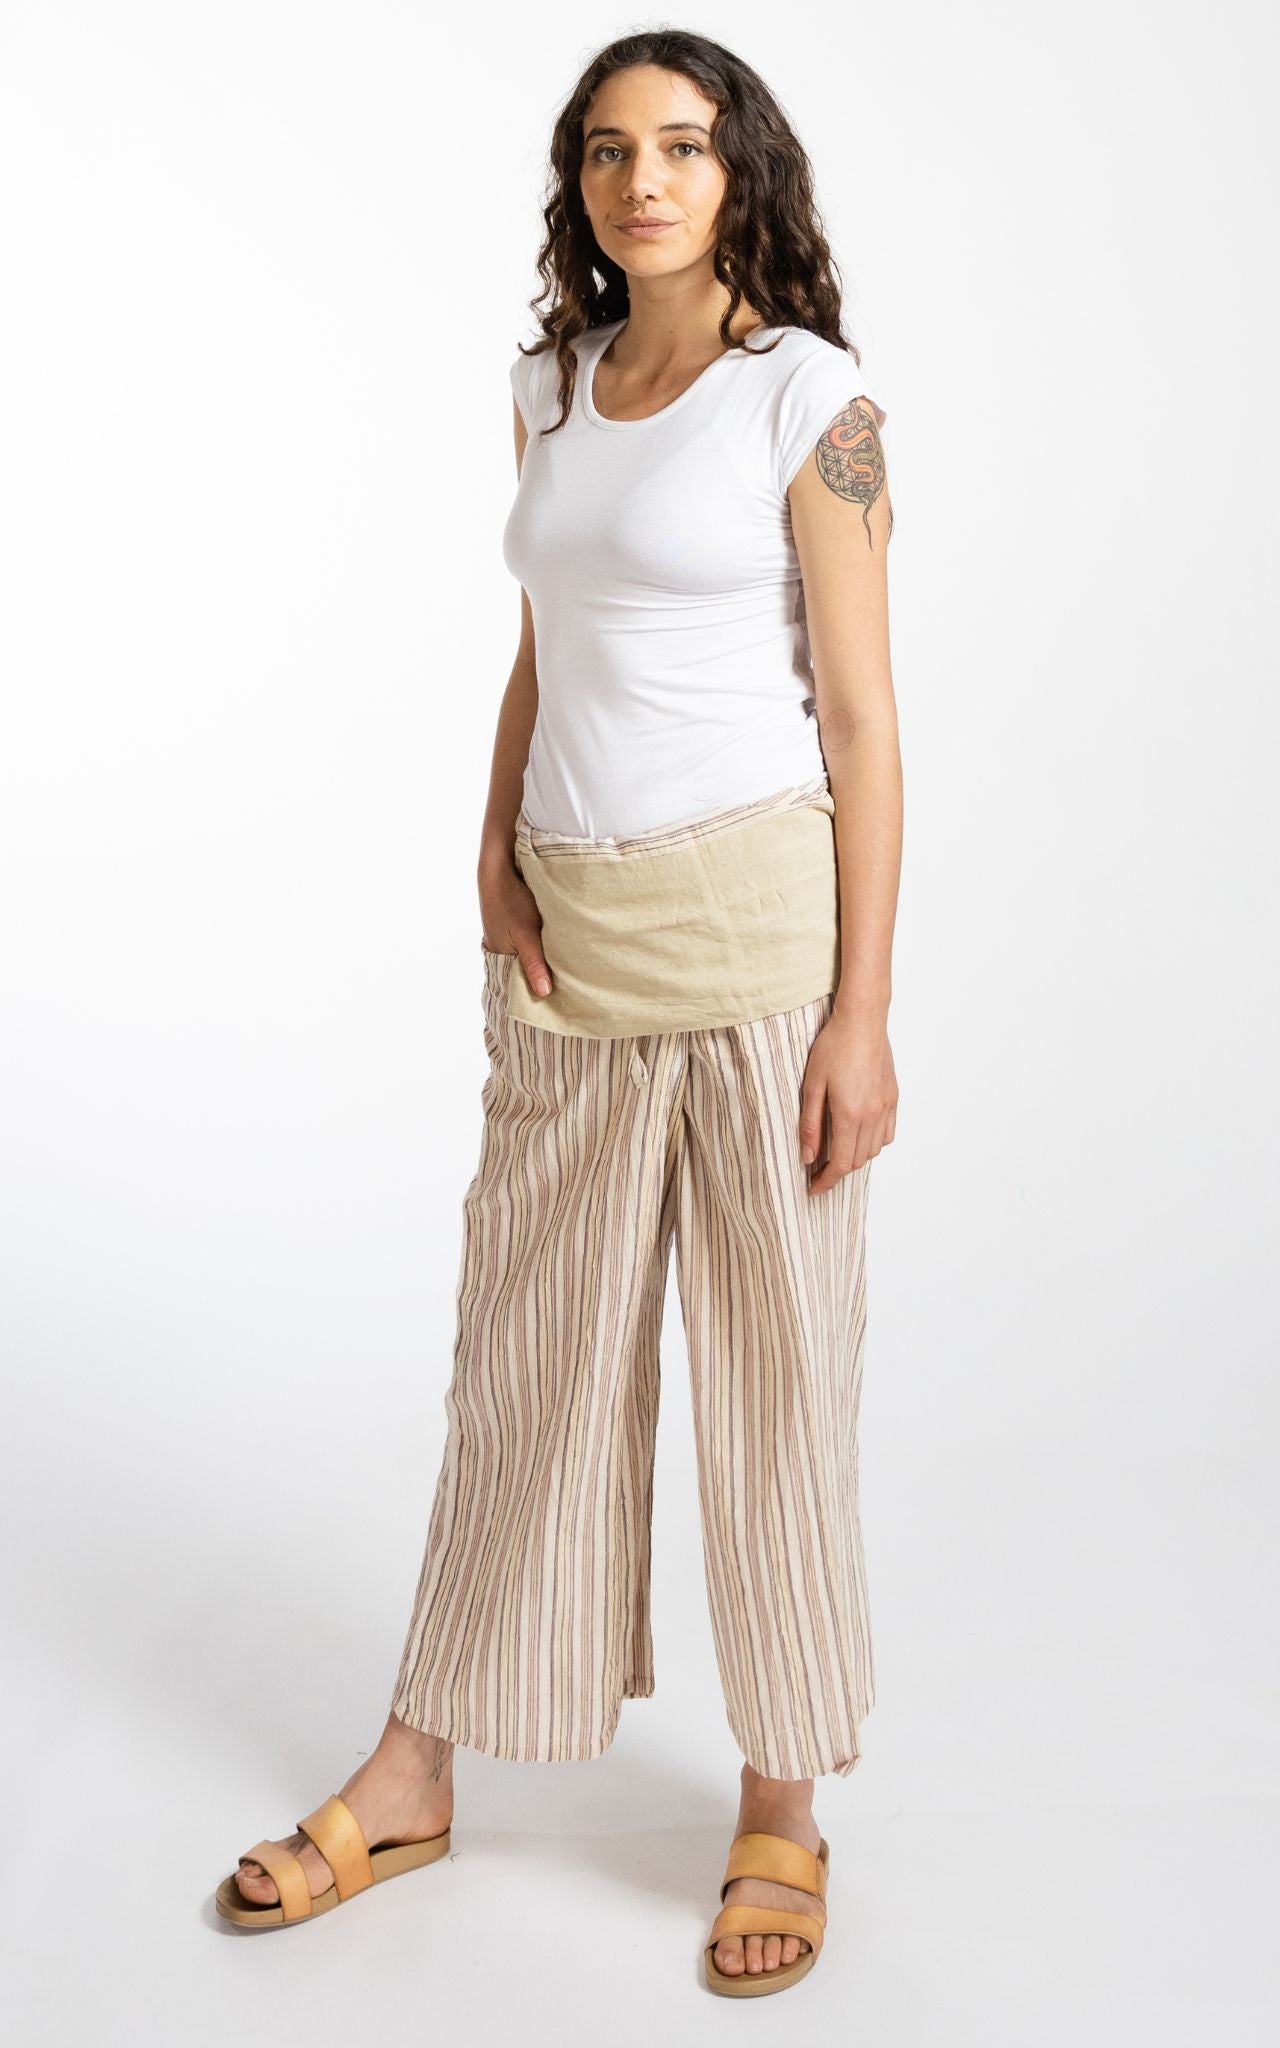 Surya Australia Ethical Cotton Thai Fisherman Pants - Striped Natural